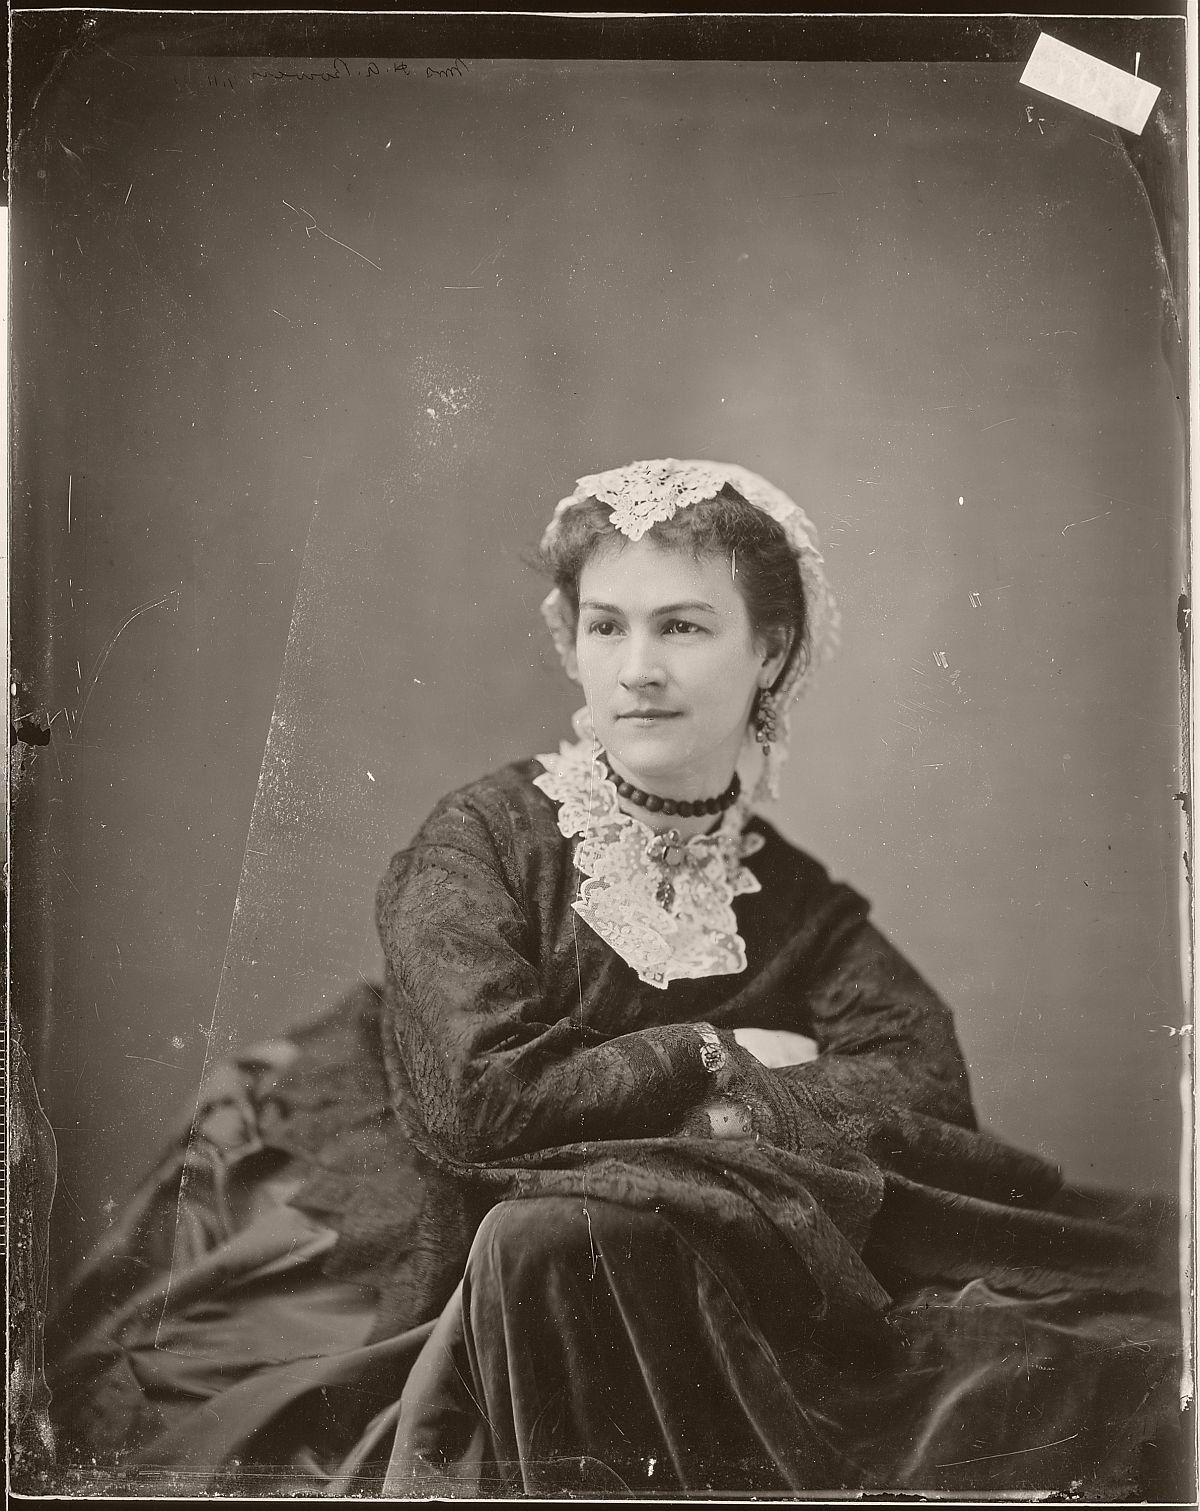 Photo by by Mathew Brady (1863)